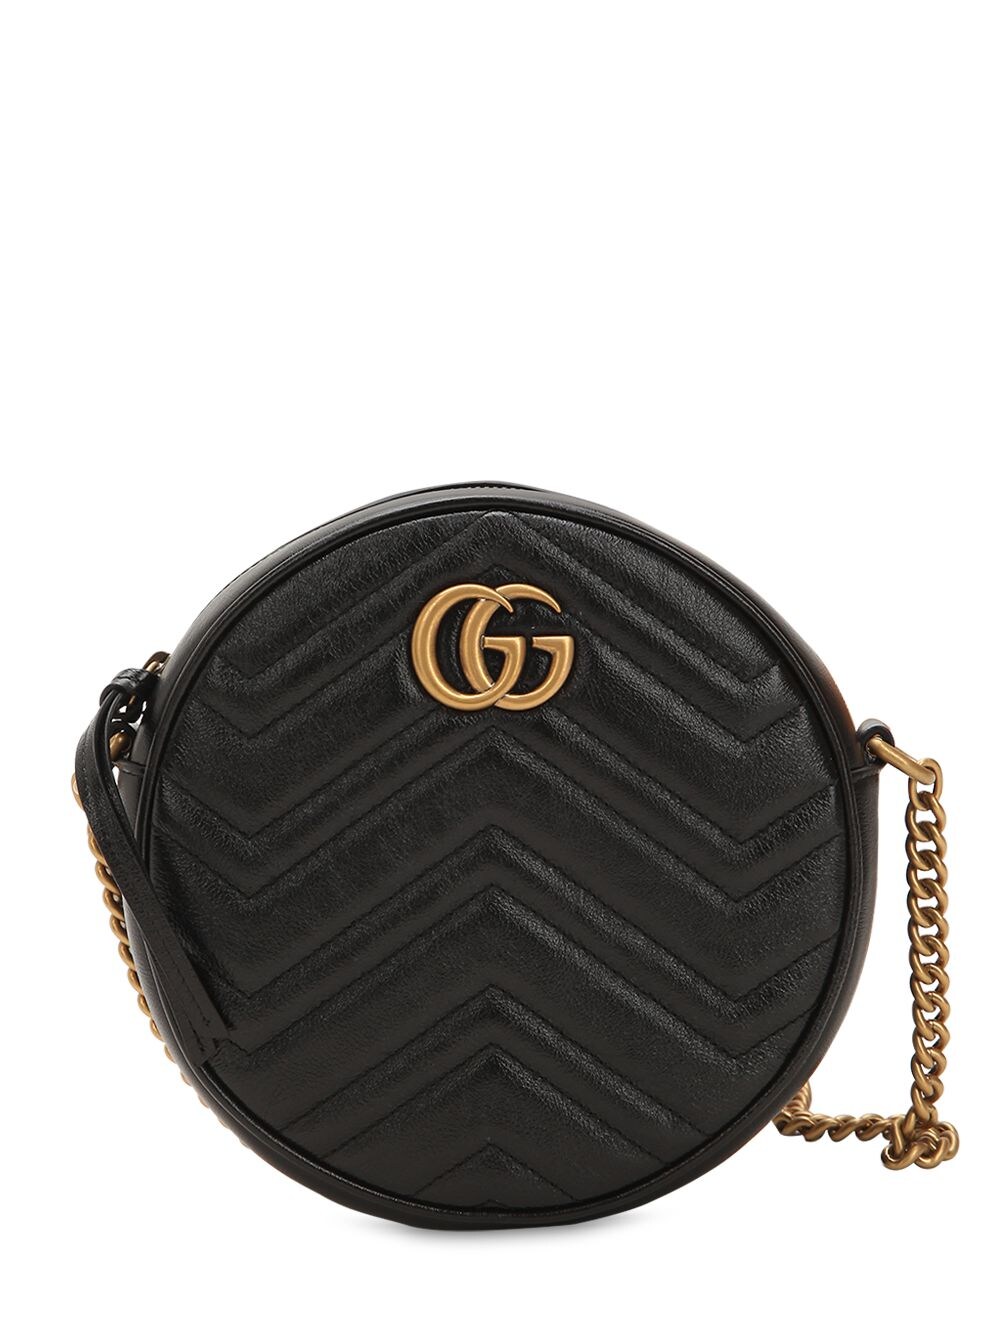 circle gucci purse